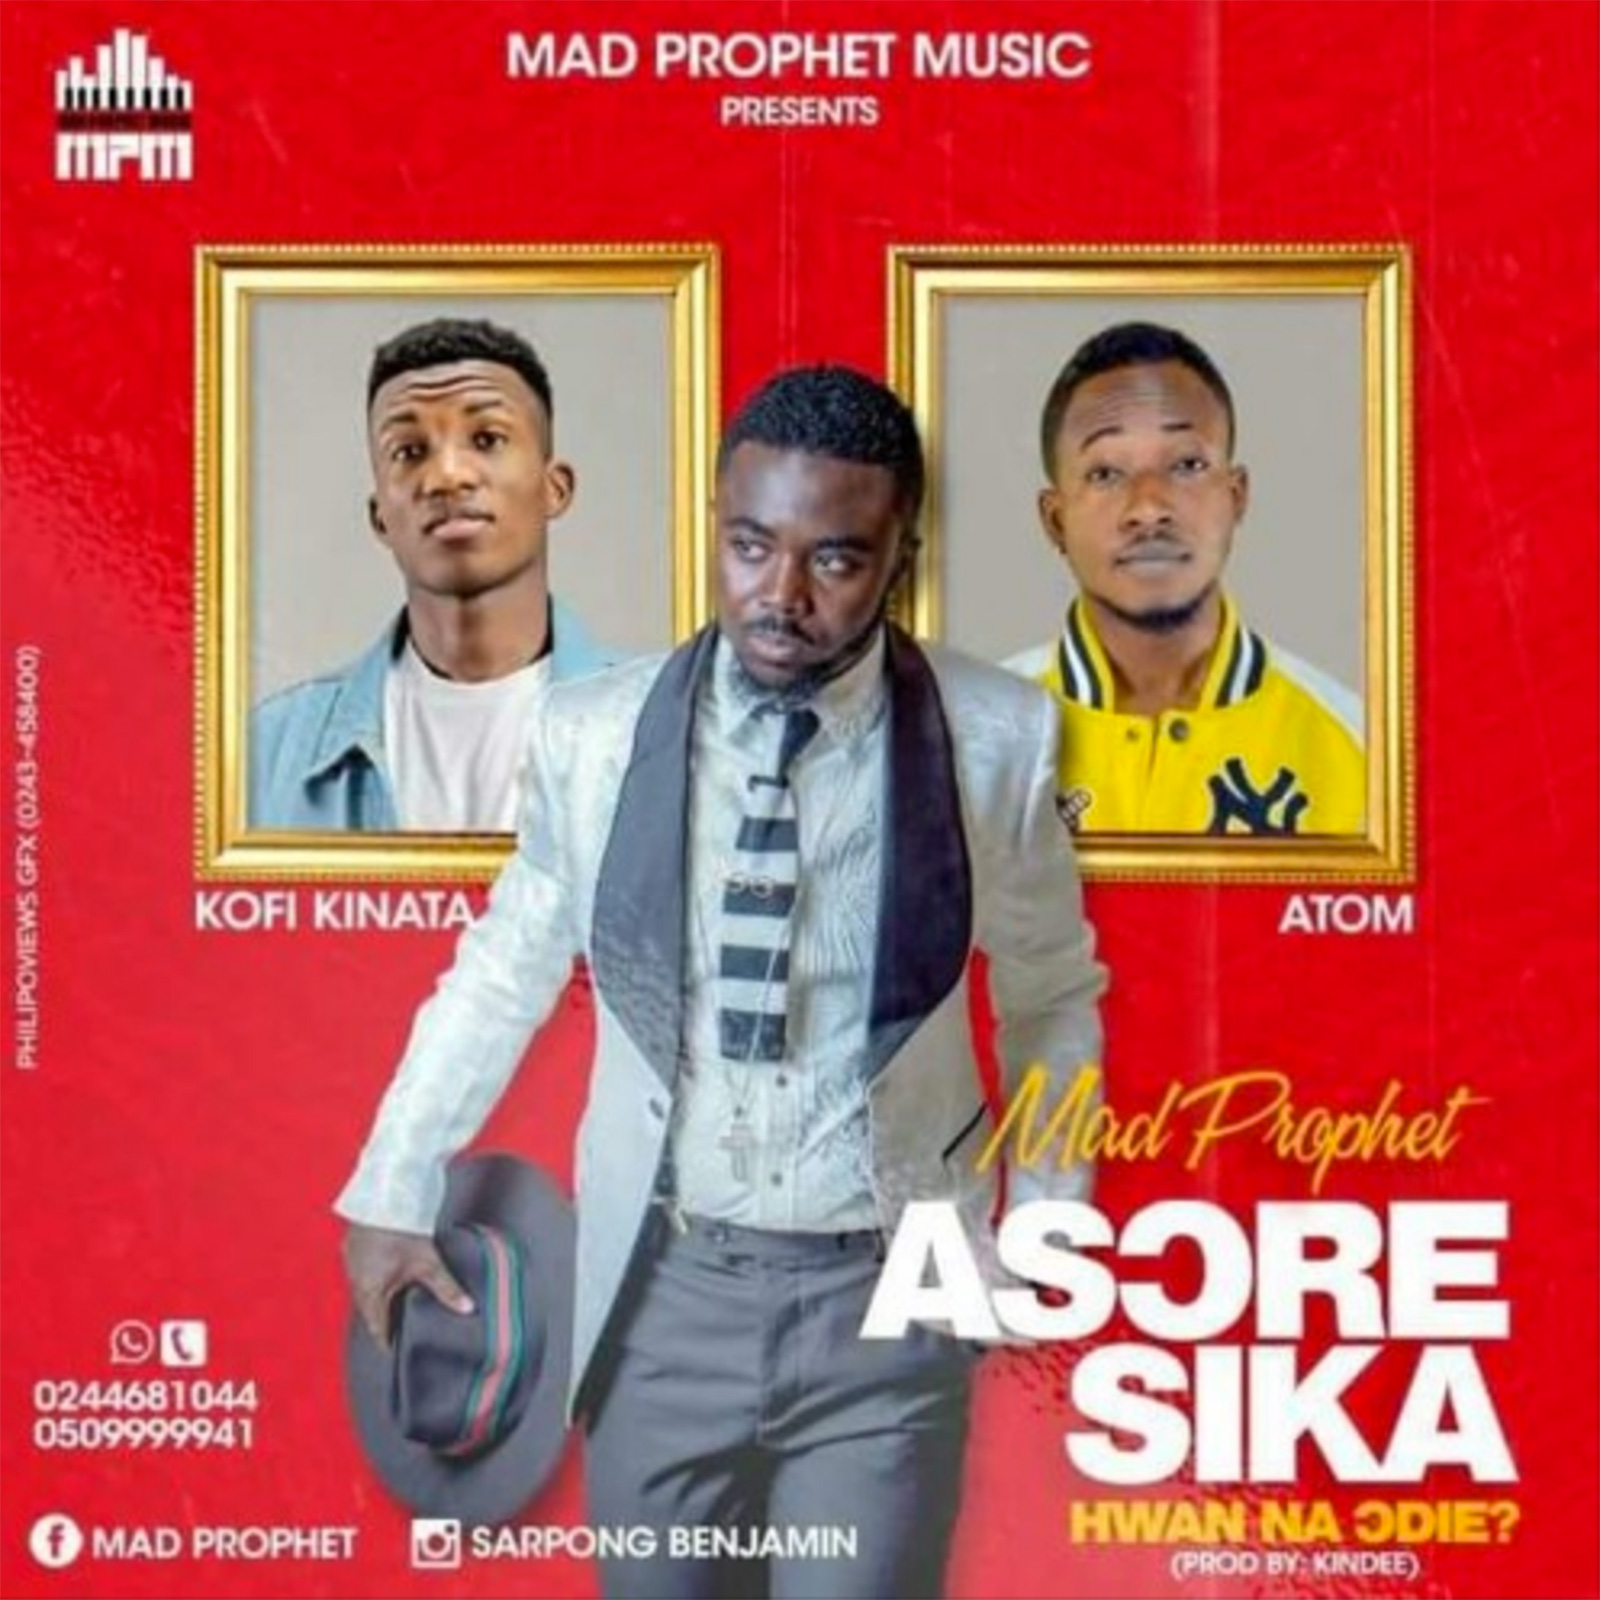 Asore Sika (Church Money) by Mad Prophet, Kofi Kinaata & Atom